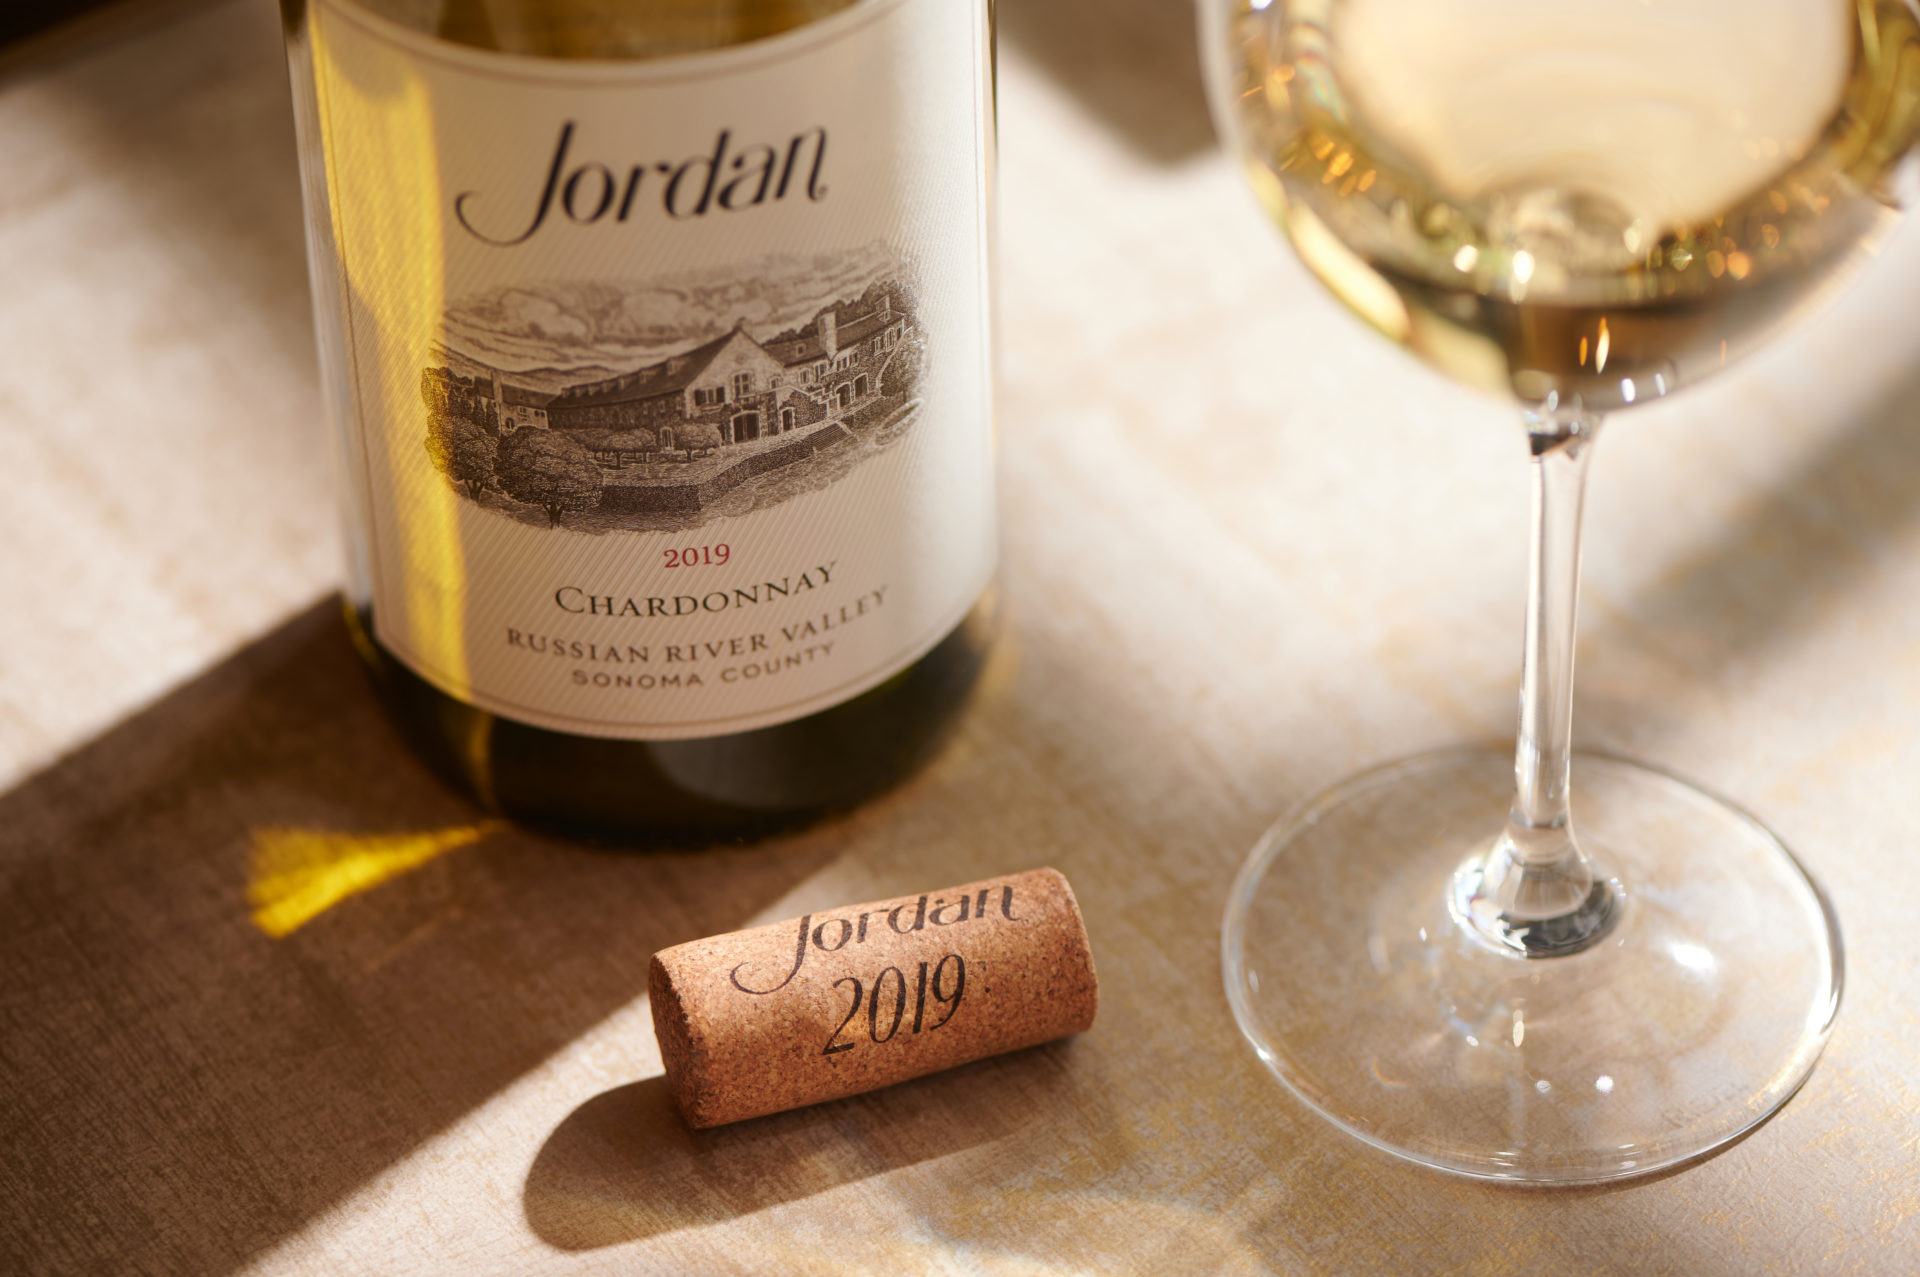 Bottle of Jordan Chardonnay, cork, and wine glass